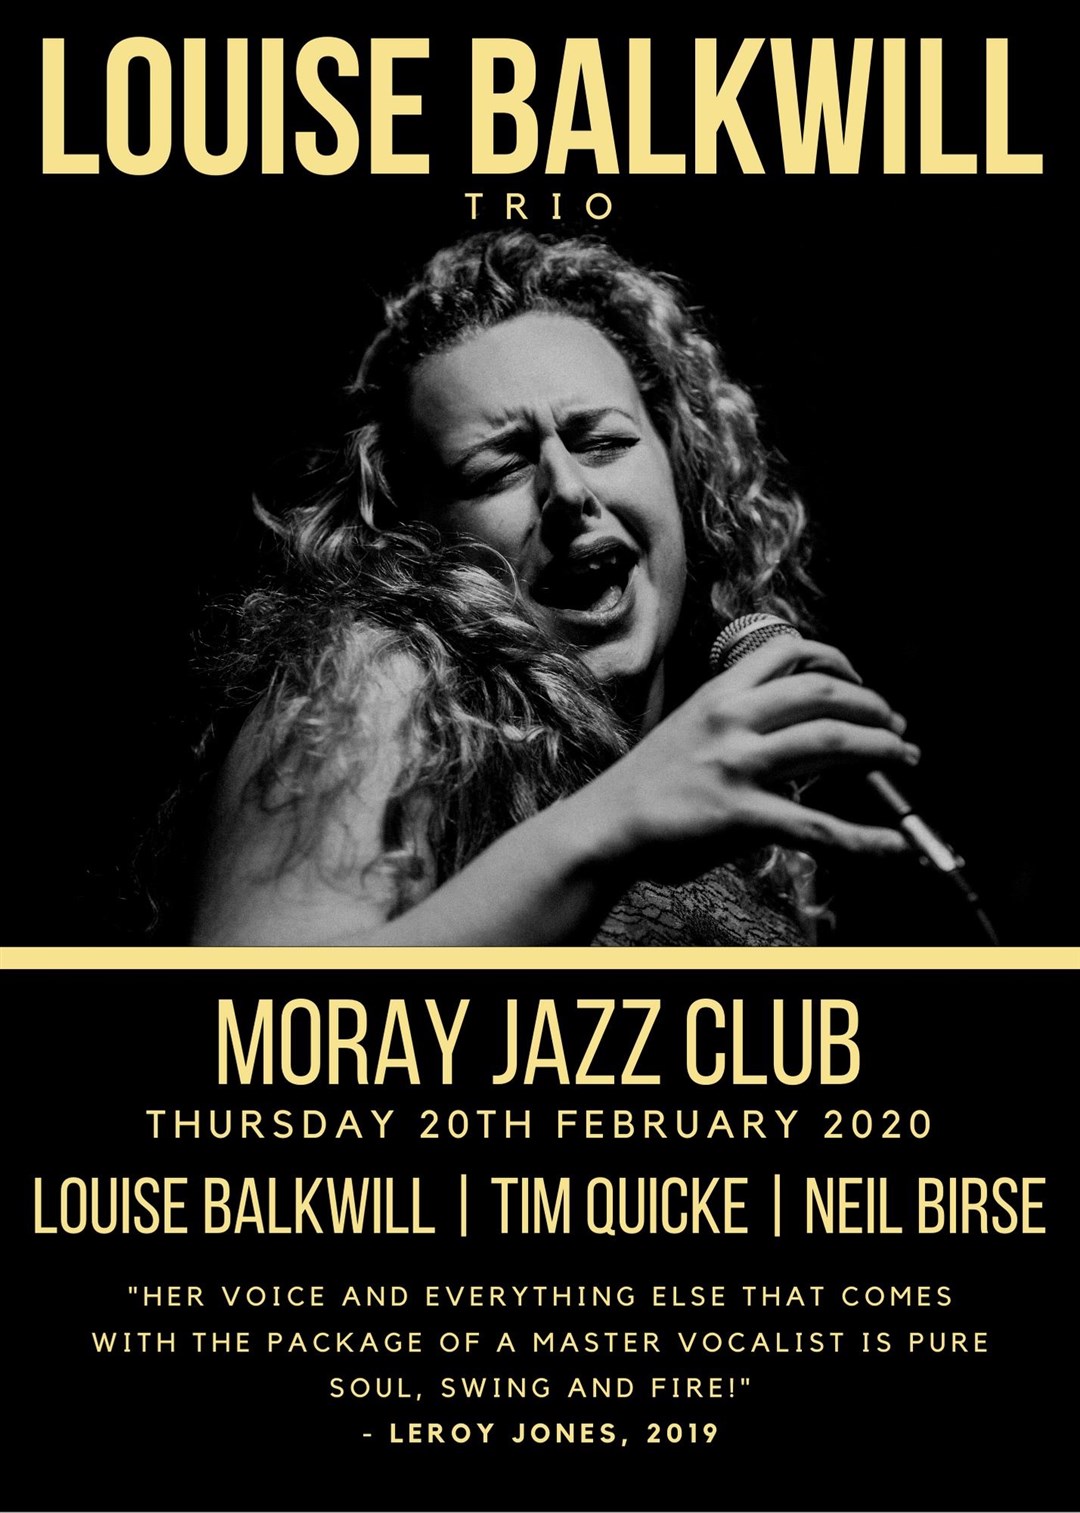 Louise Balkwill will perform at Moray Jazz Club on Thursday, February 20.